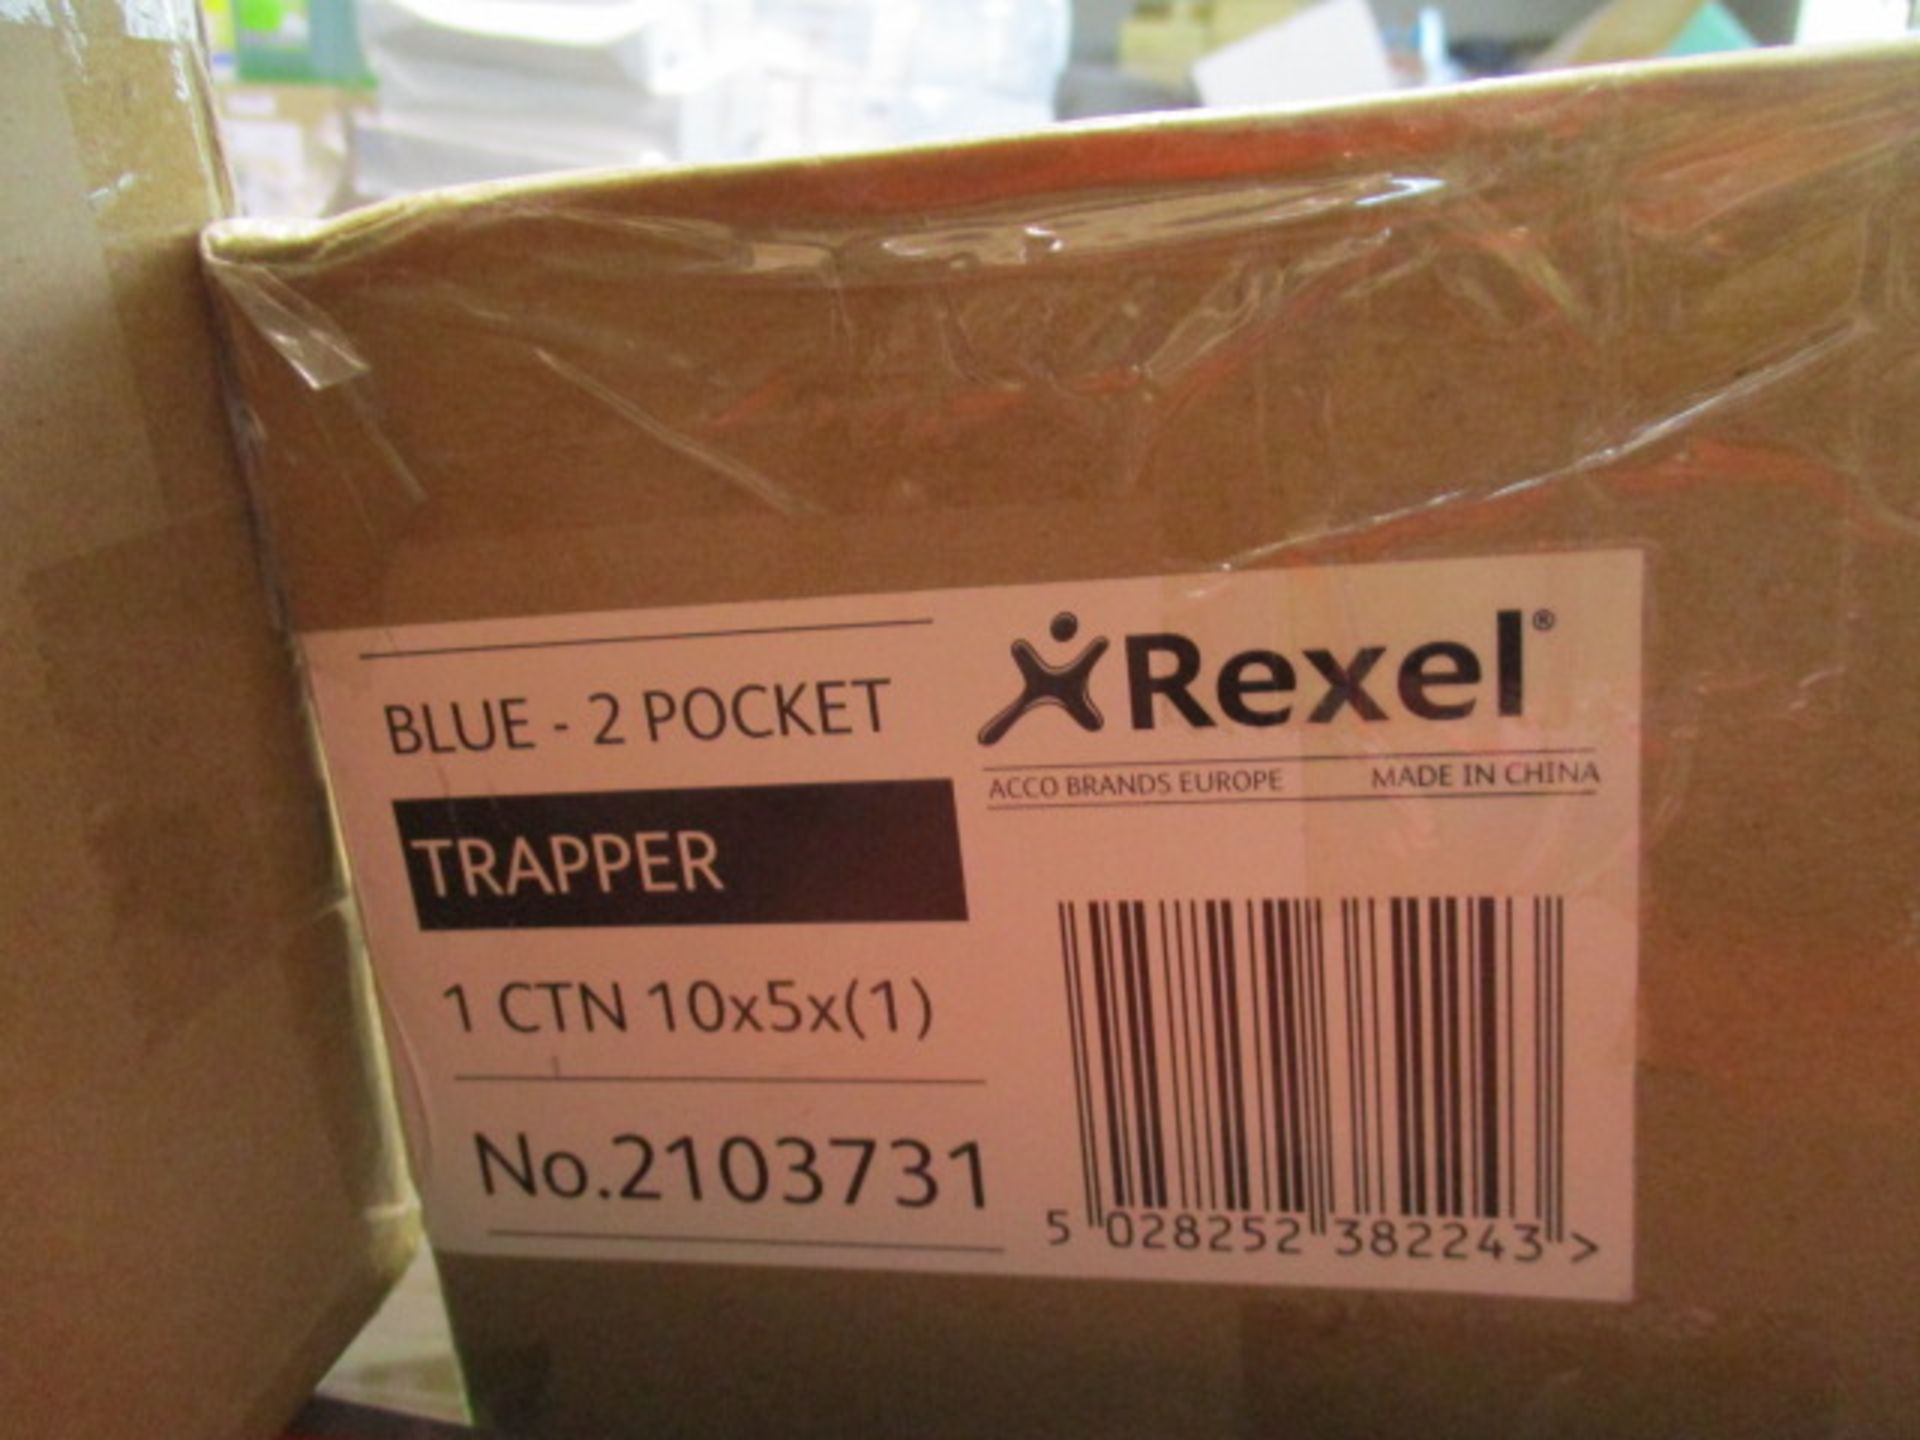 Appx 500pcs Rexel trapper system various colours - Image 5 of 6